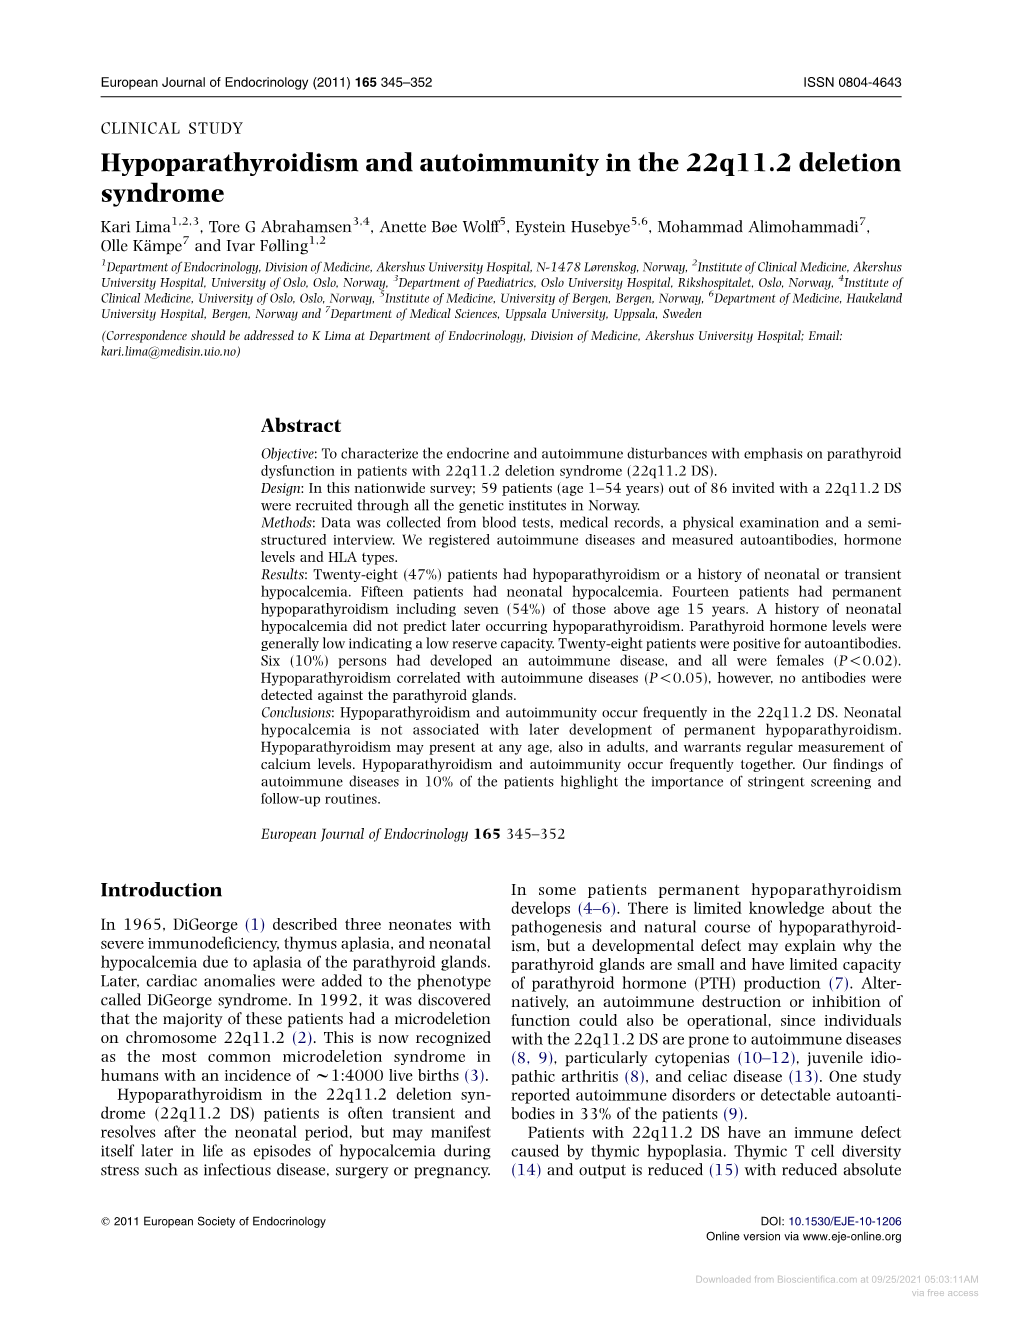 Hypoparathyroidism and Autoimmunity in the 22Q11.2